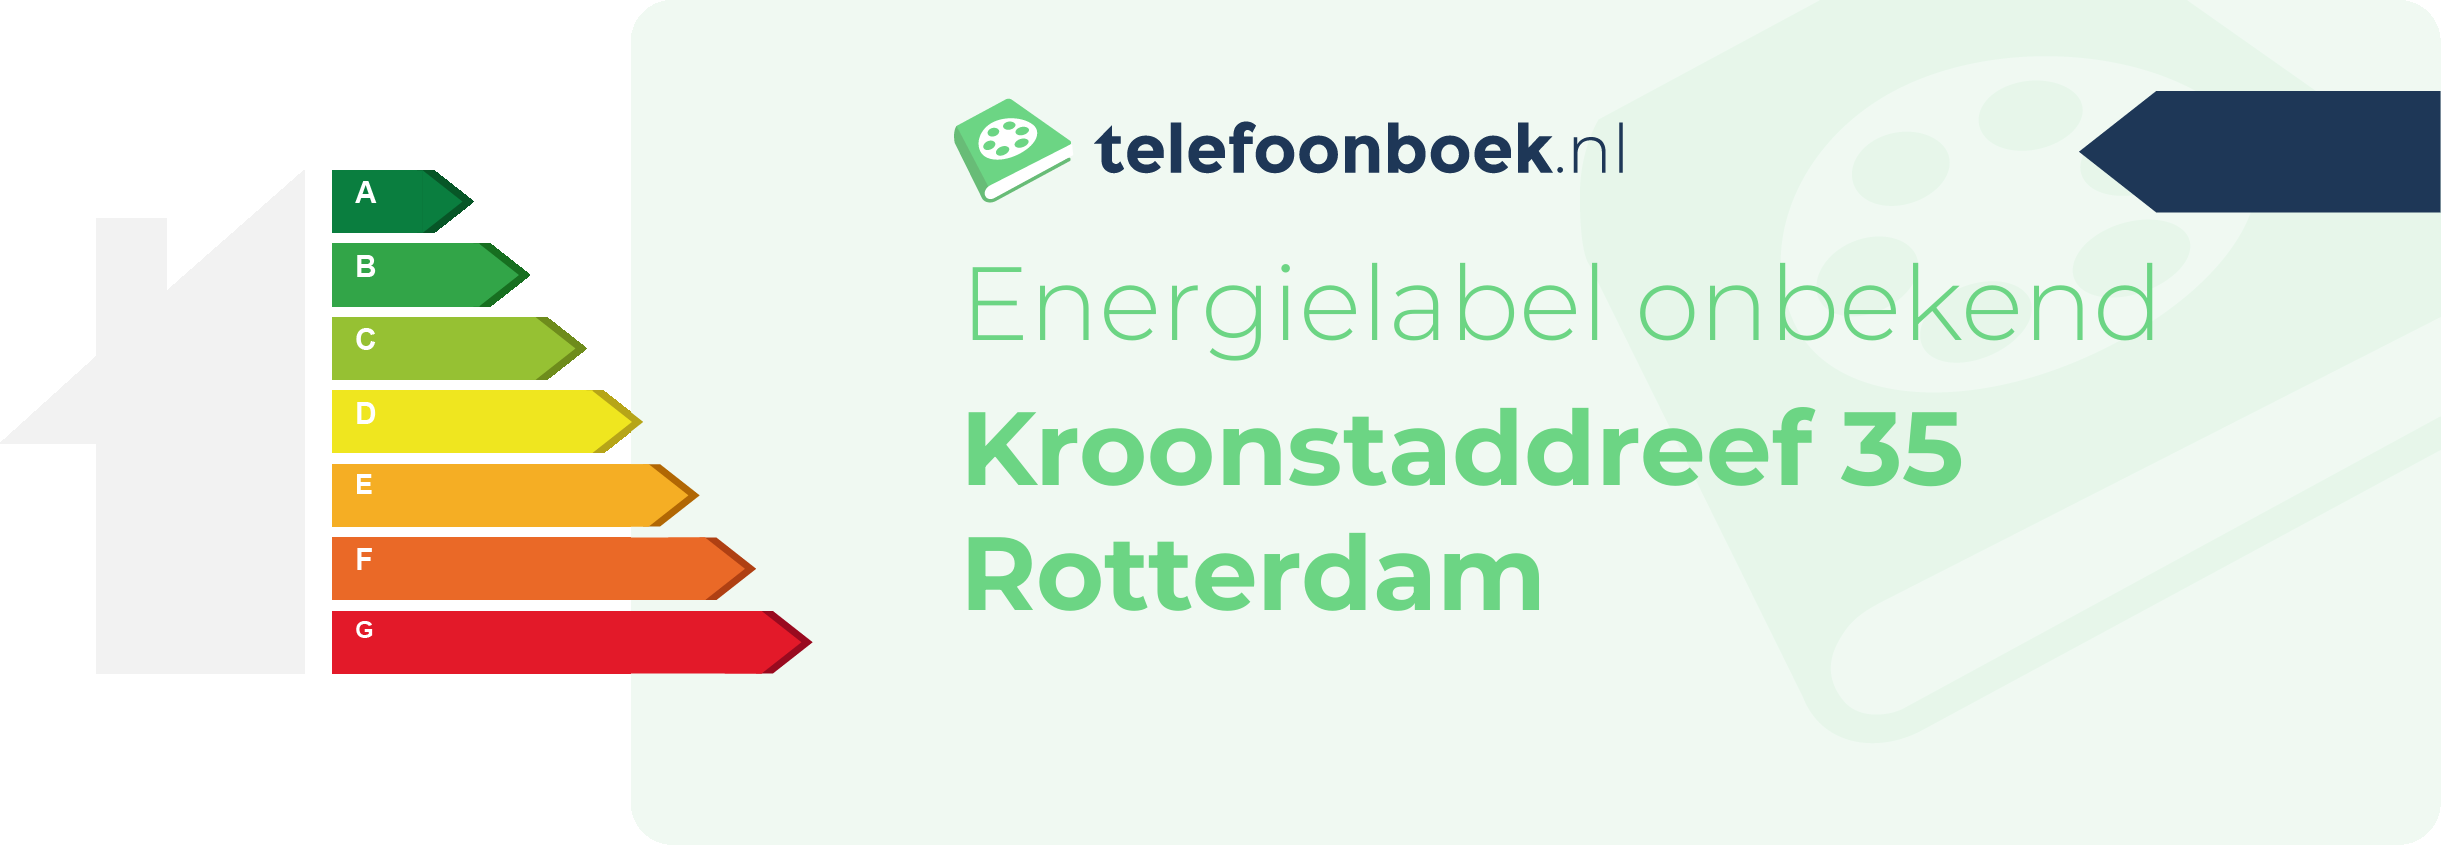 Energielabel Kroonstaddreef 35 Rotterdam